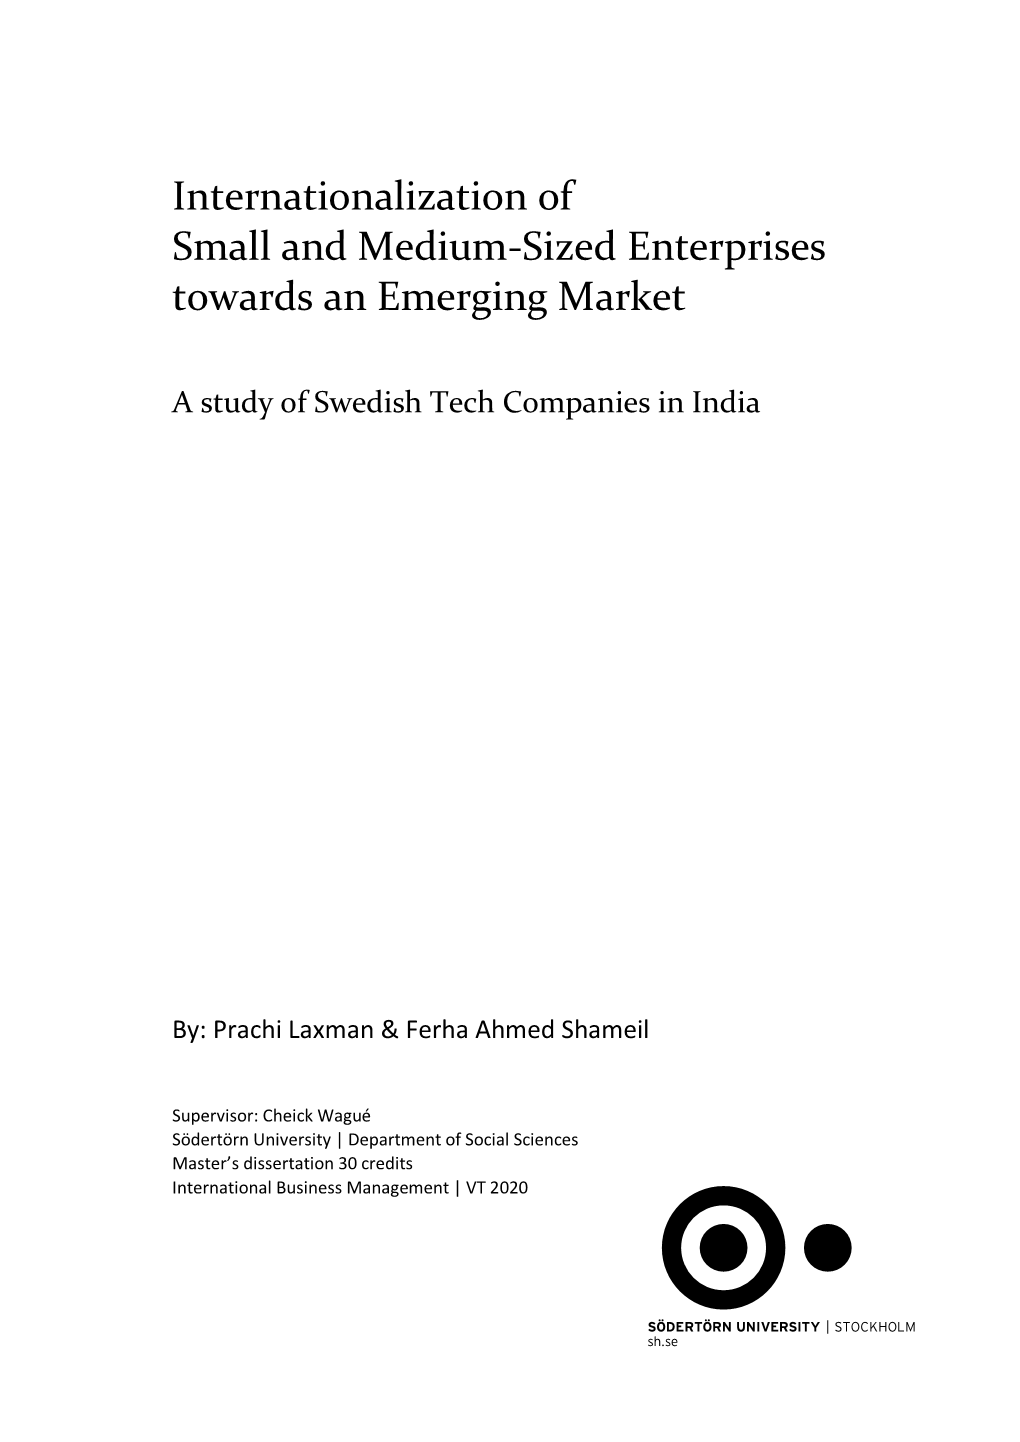 Internationalization of Small and Medium-Sized Enterprises Towards an Emerging Market